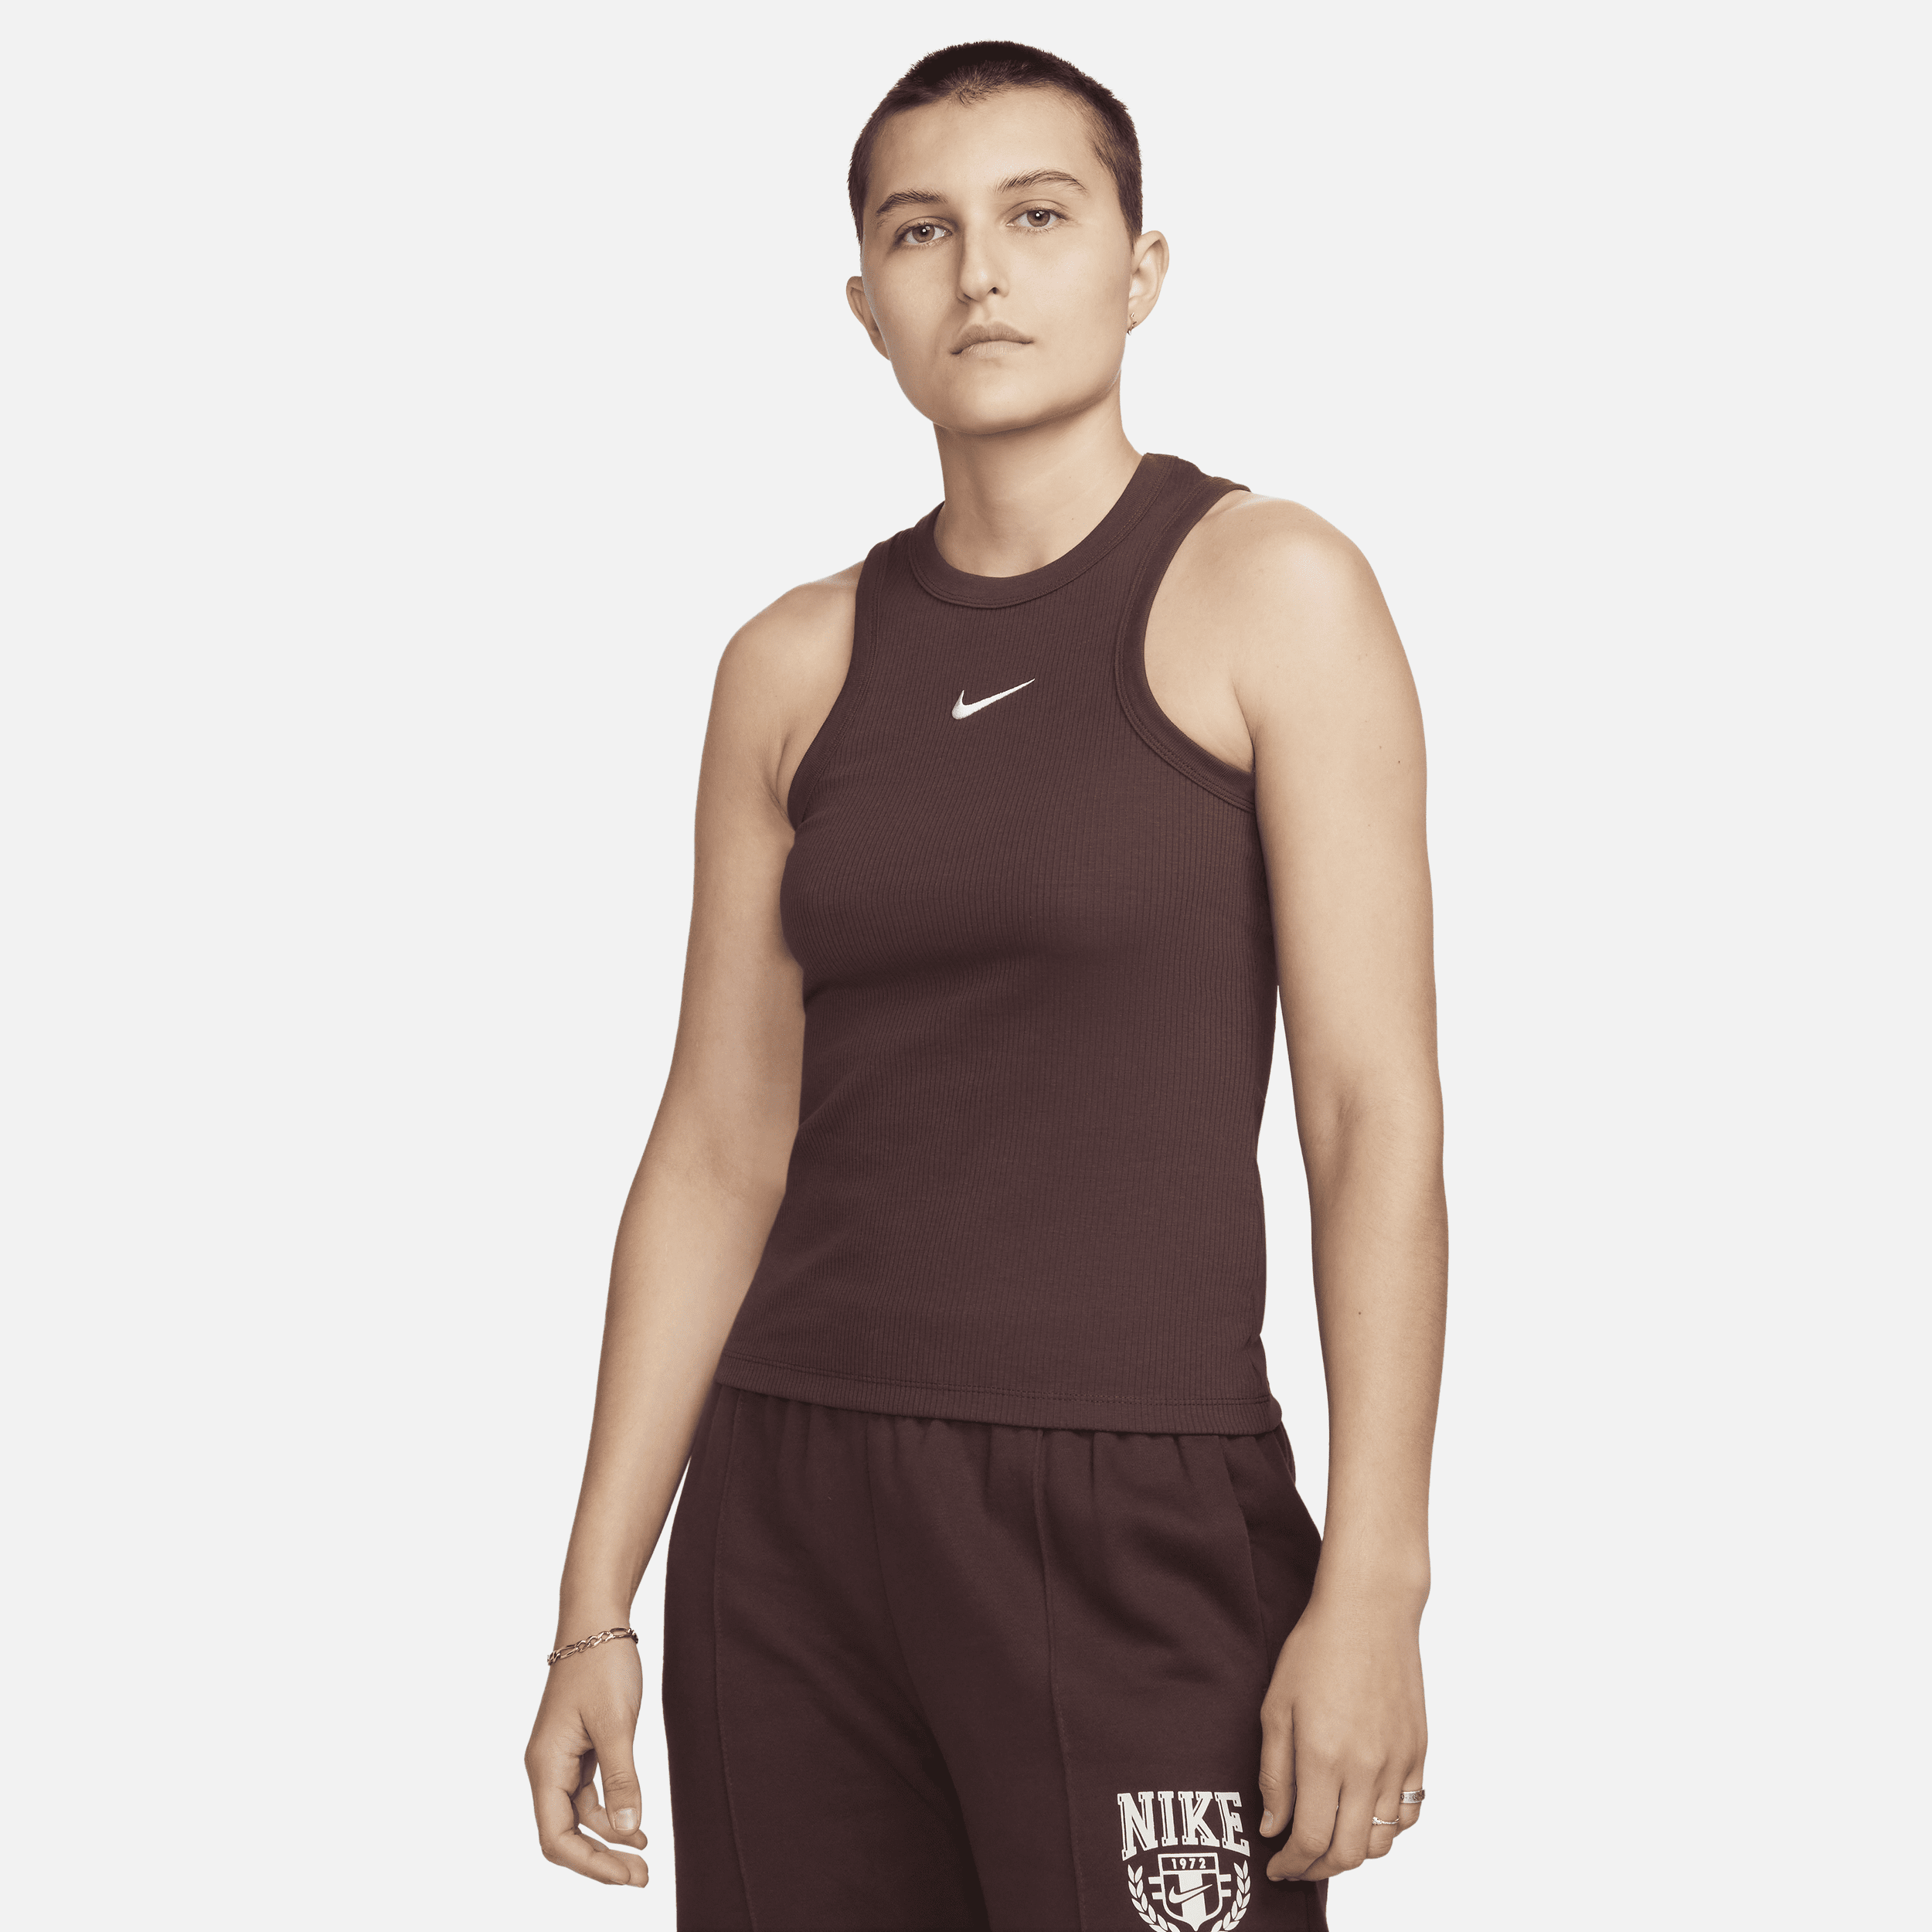 Nike Sportswear-tanktop til kvinder - brun